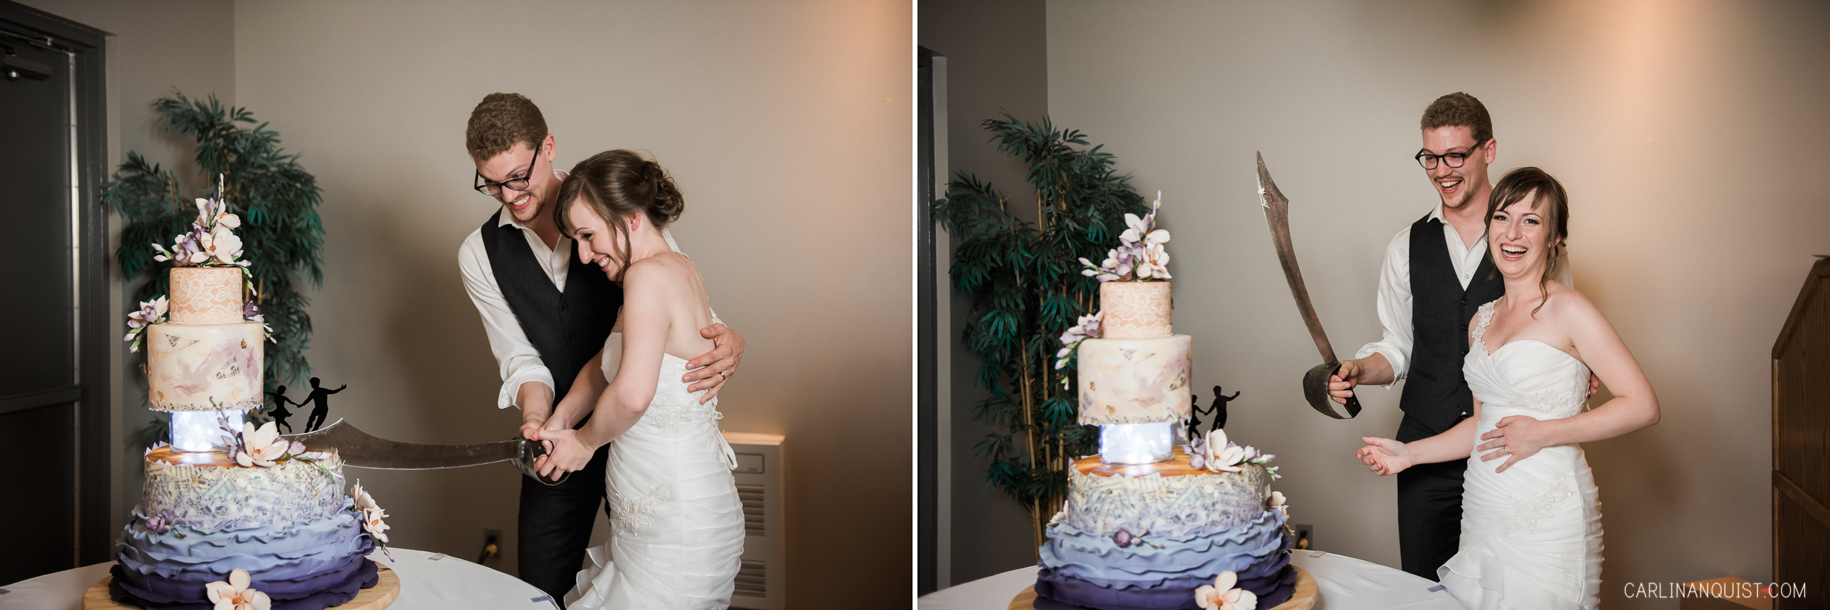 Canyon Meadows Community Association Wedding Photos | Wedding Cake